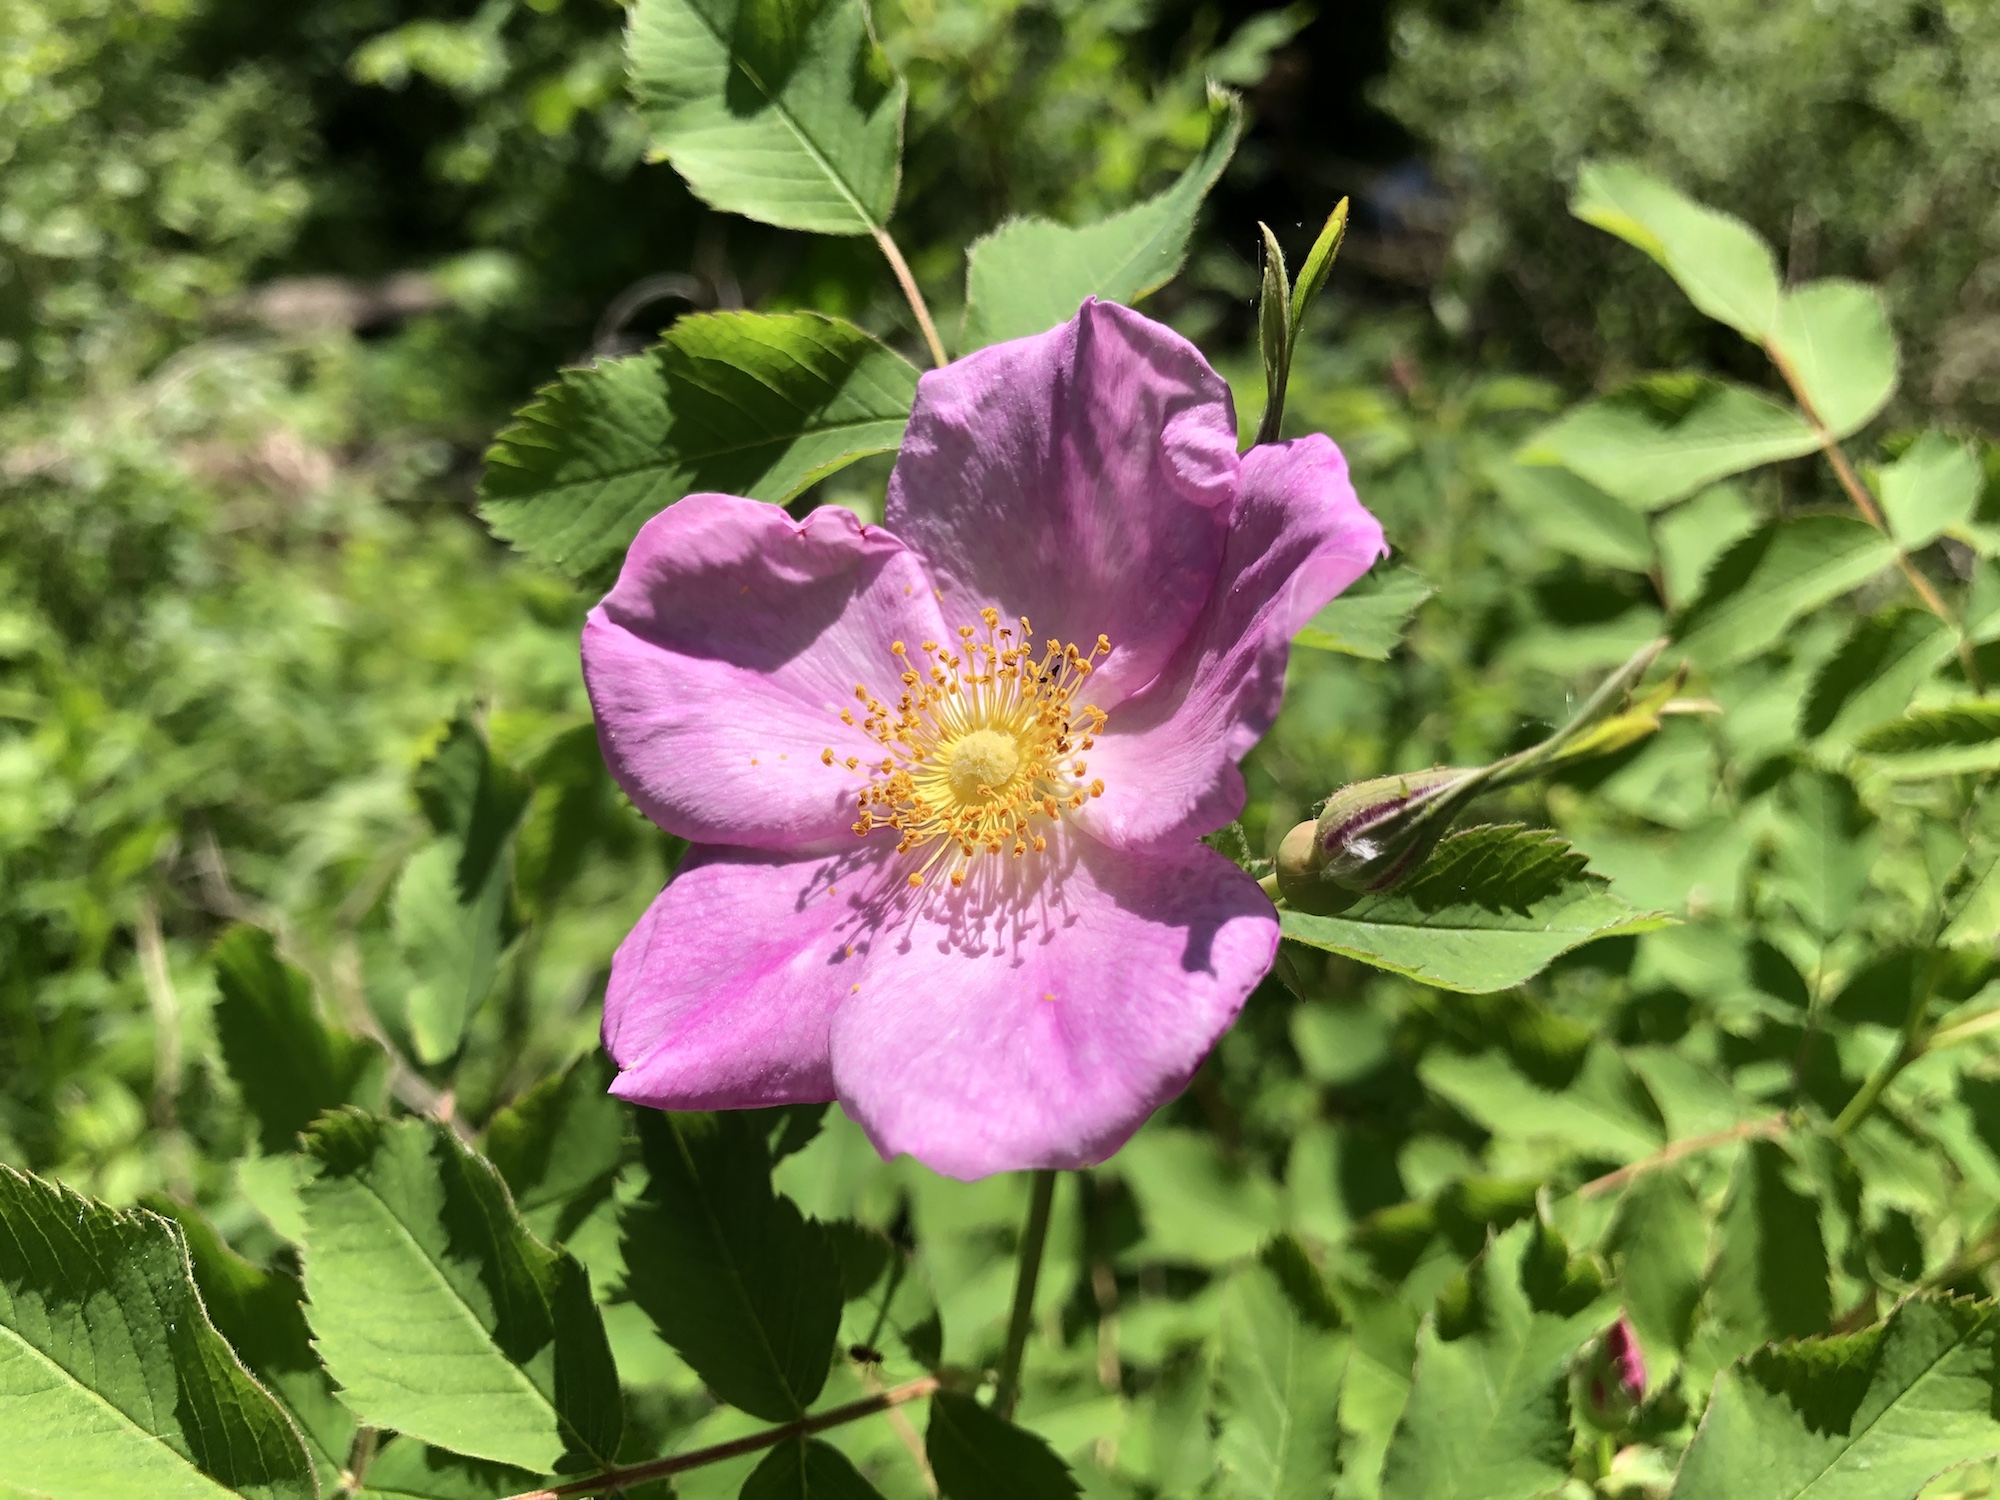 Prairie Rose near Council Ring in the Oak Savanna on June 5, 2019.